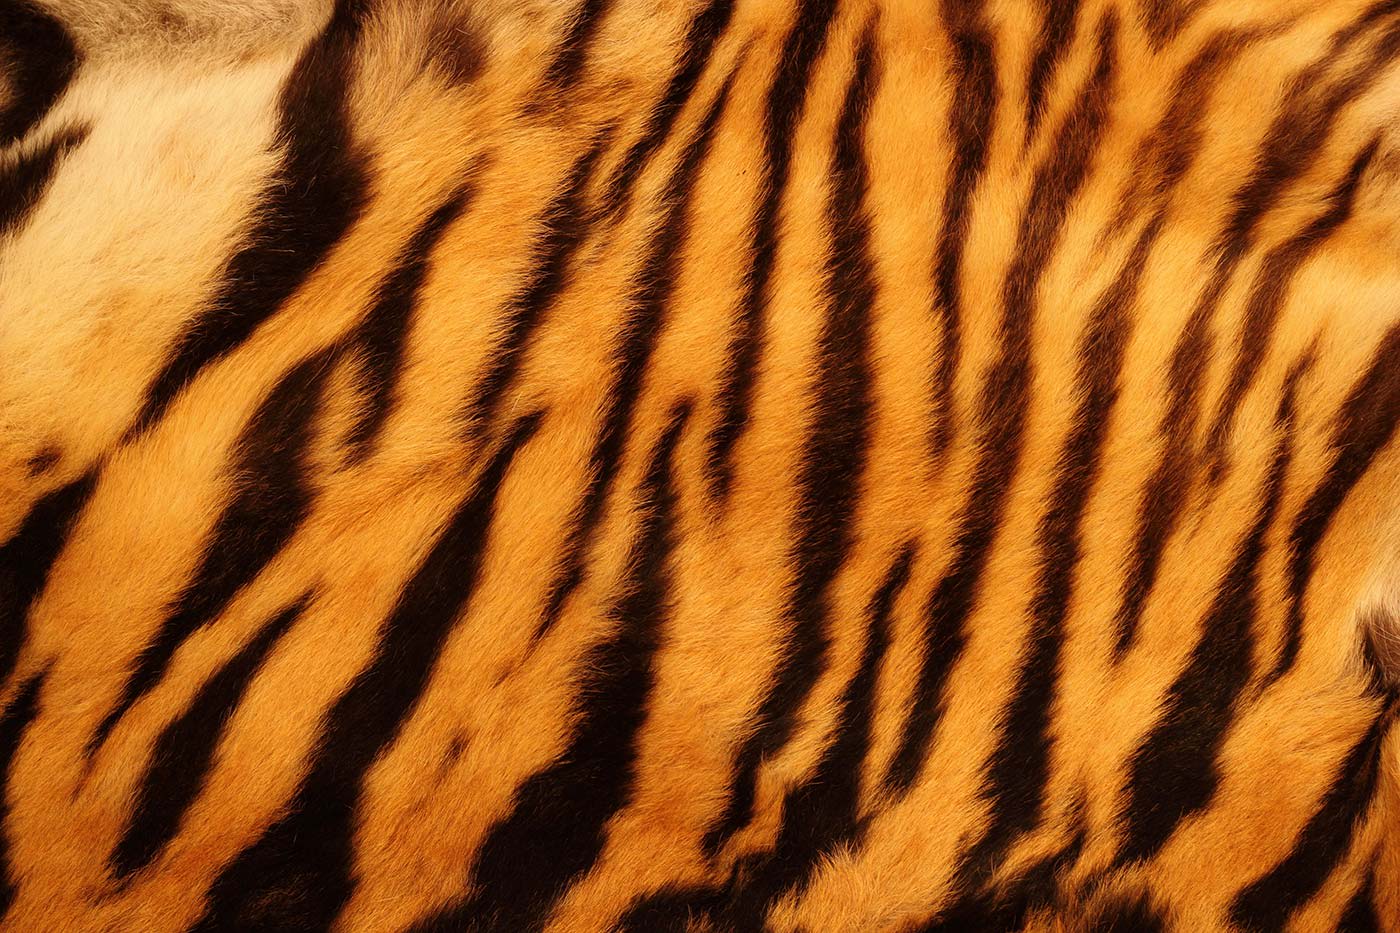 Printables - Identifying Tiger Stripes